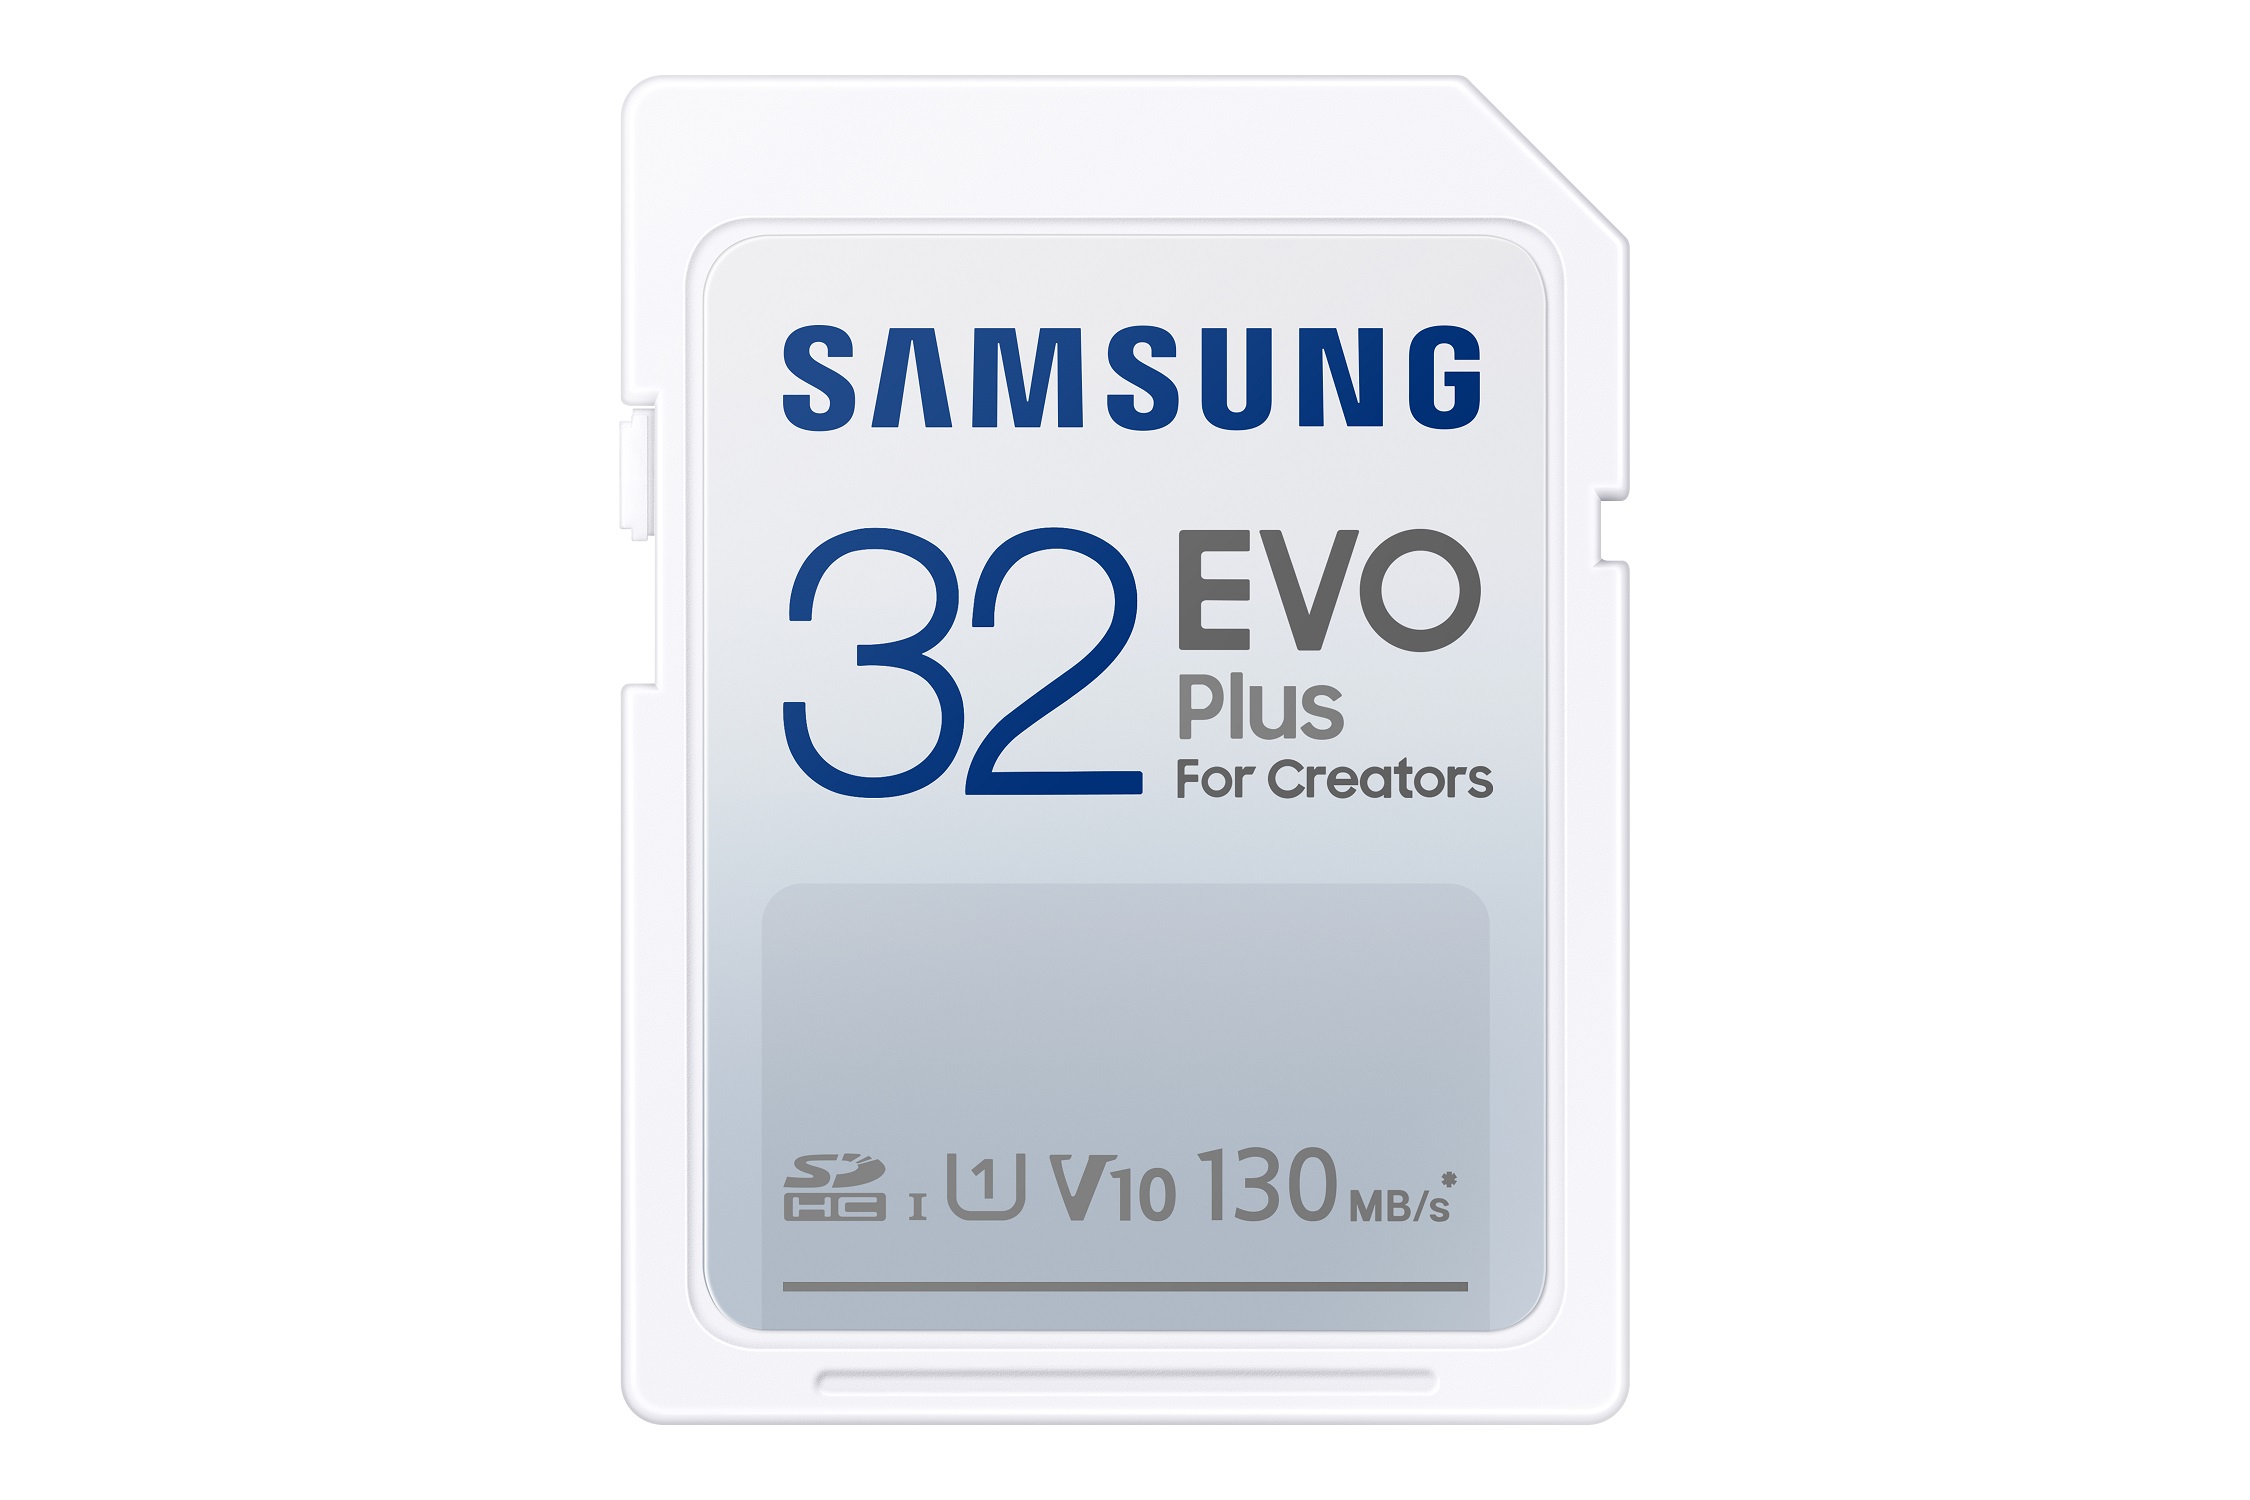 Samsung EVO Plus/SDHC/32GB/130MBps/UHS-I U1 / Class 10